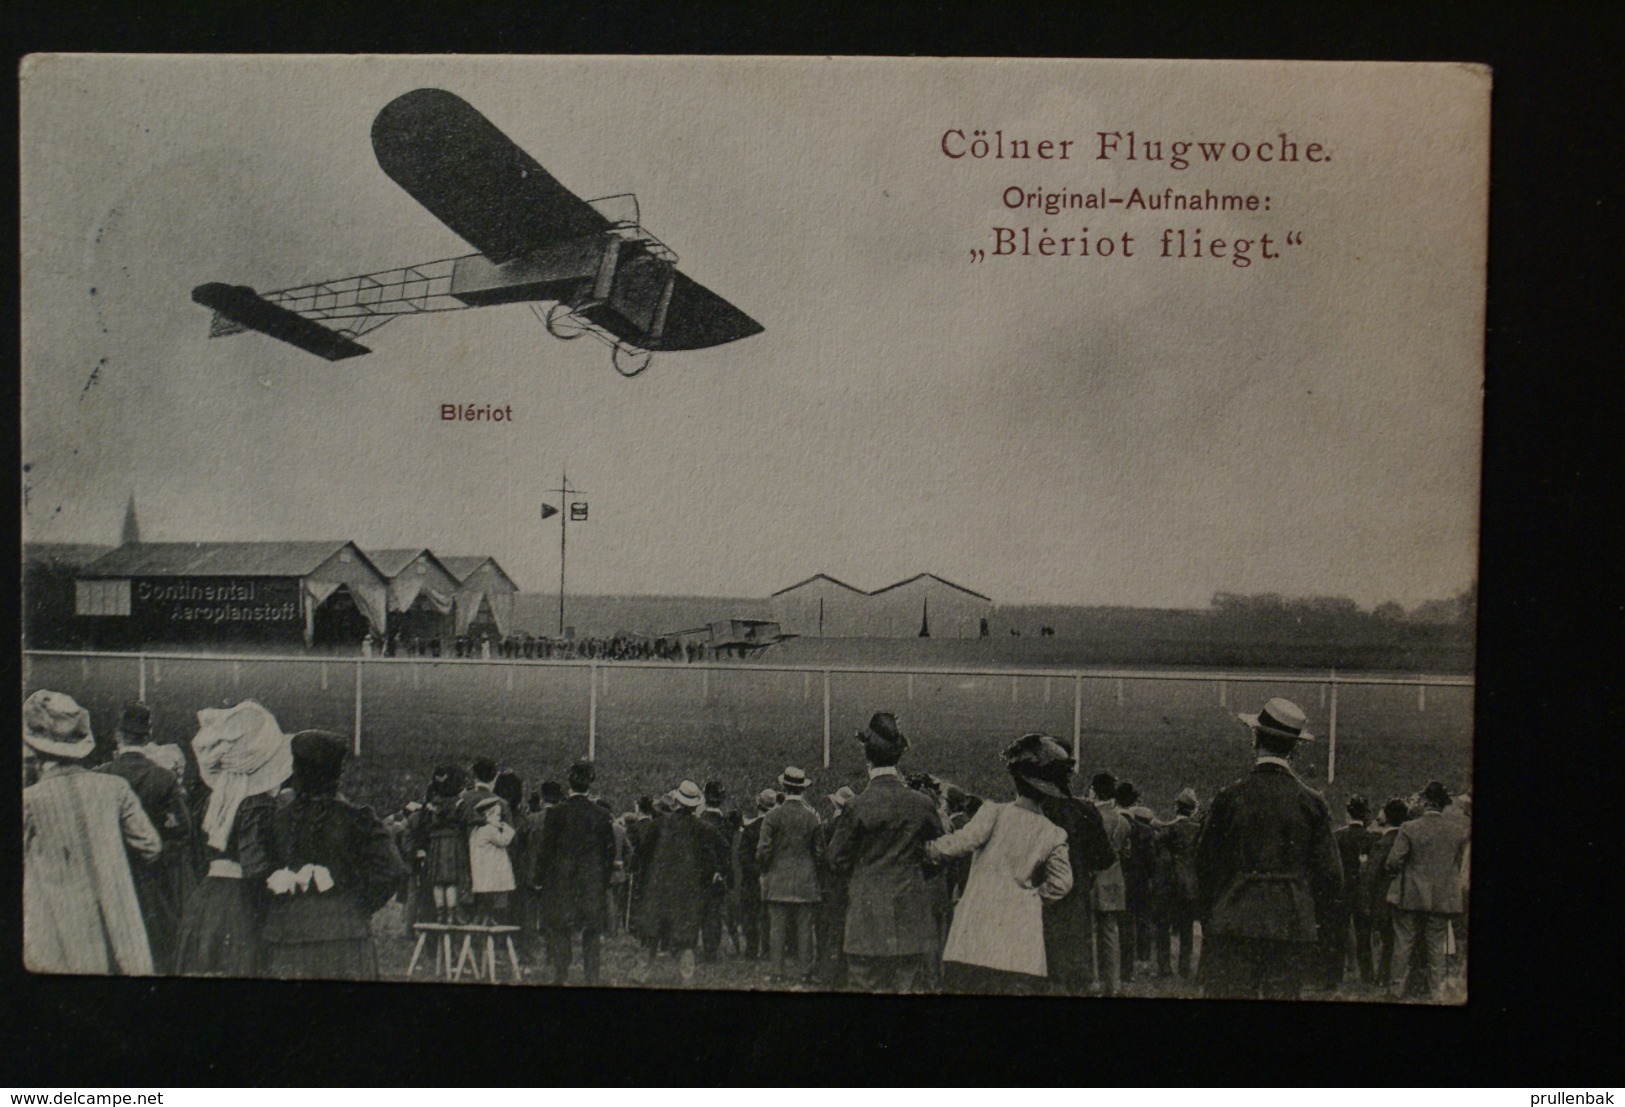 Colner Flugwoche / Blériot Fliegt - Meetings